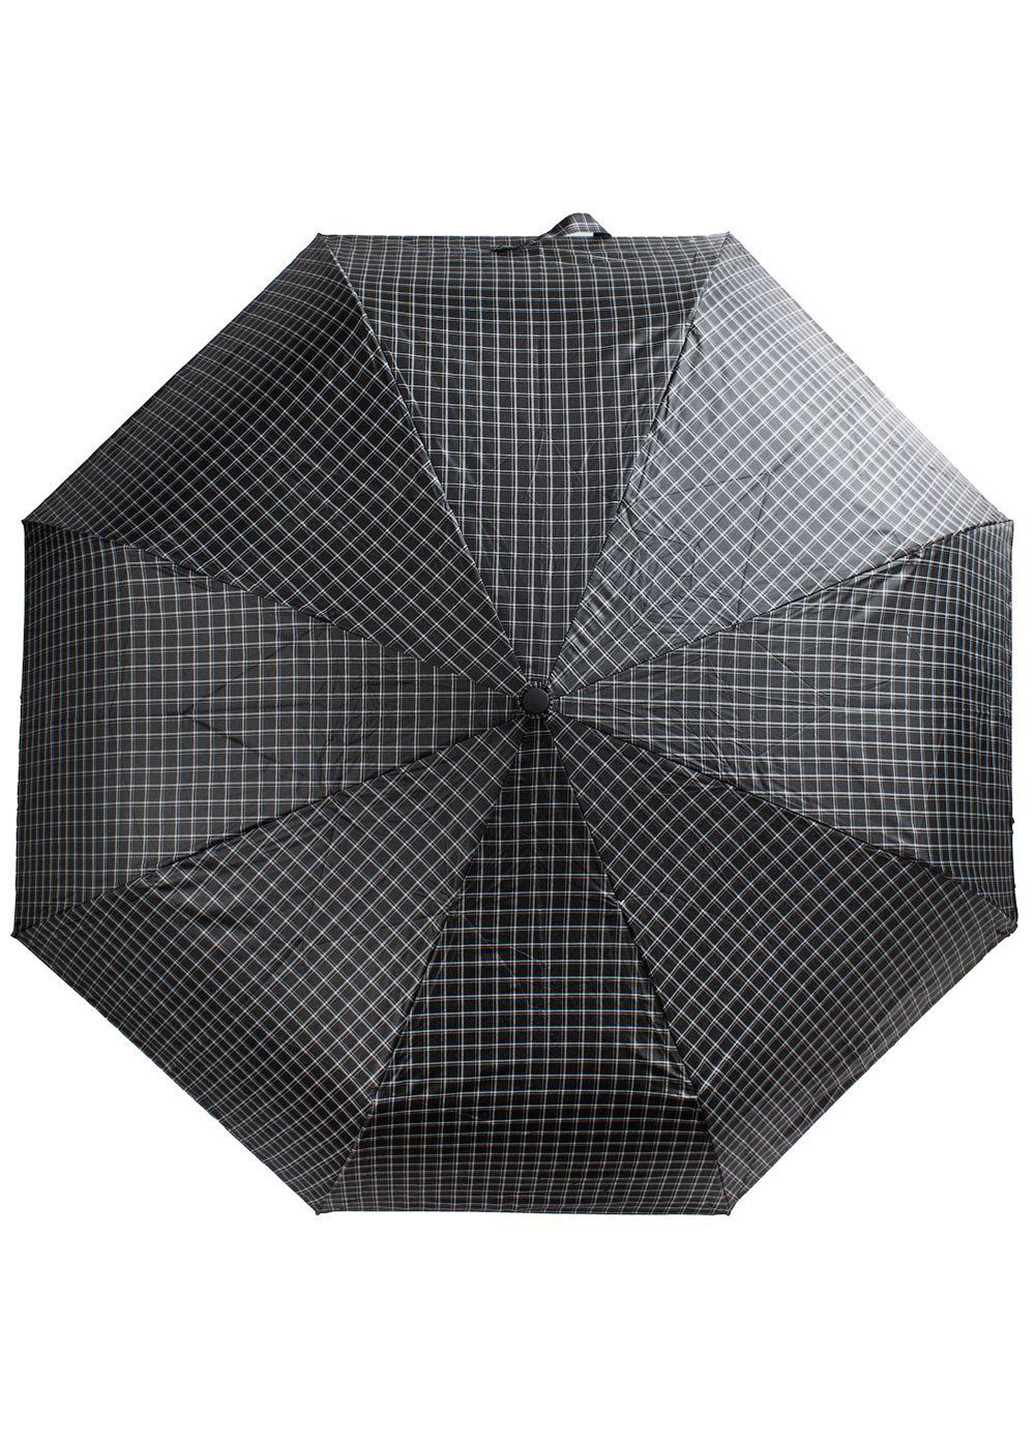 Мужской складной зонт автомат 98 см Magic Rain (255709778)